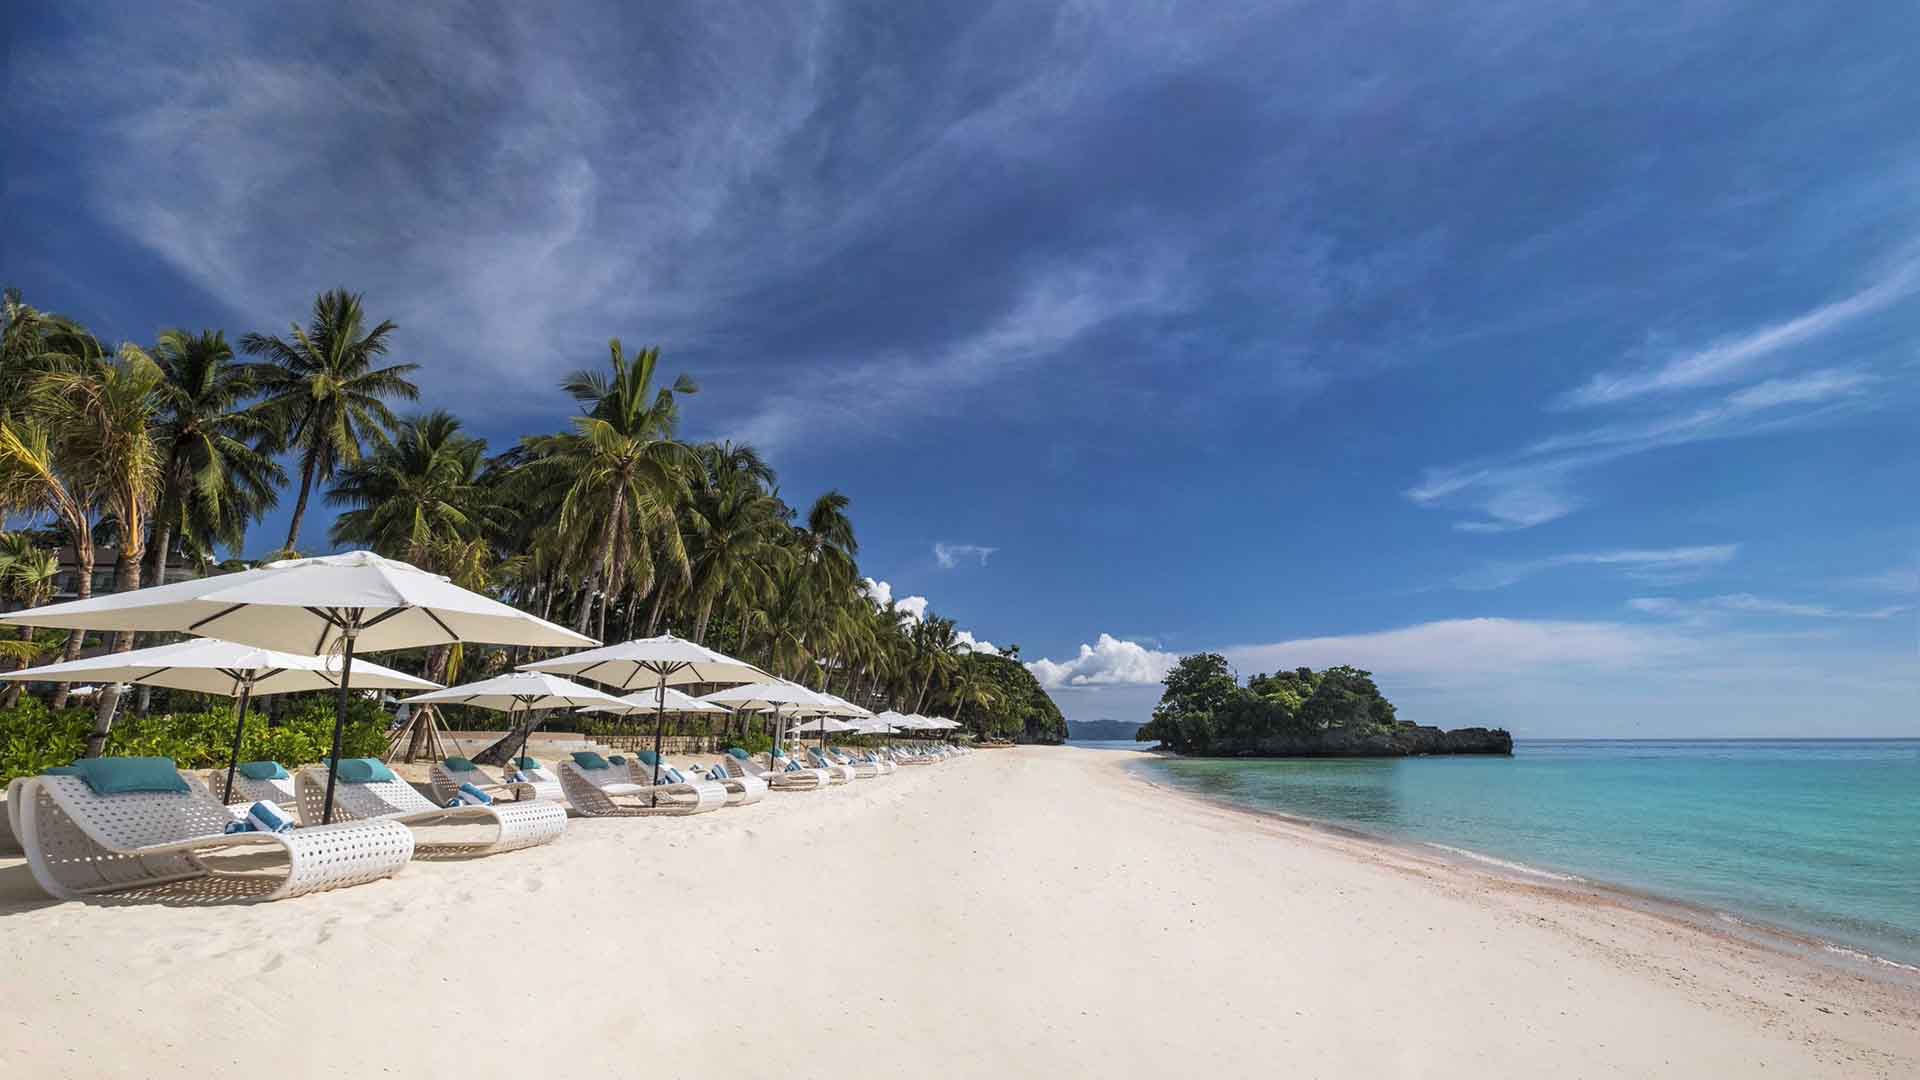 La isla filipina de Boracay, cerrada al turismo por seis meses